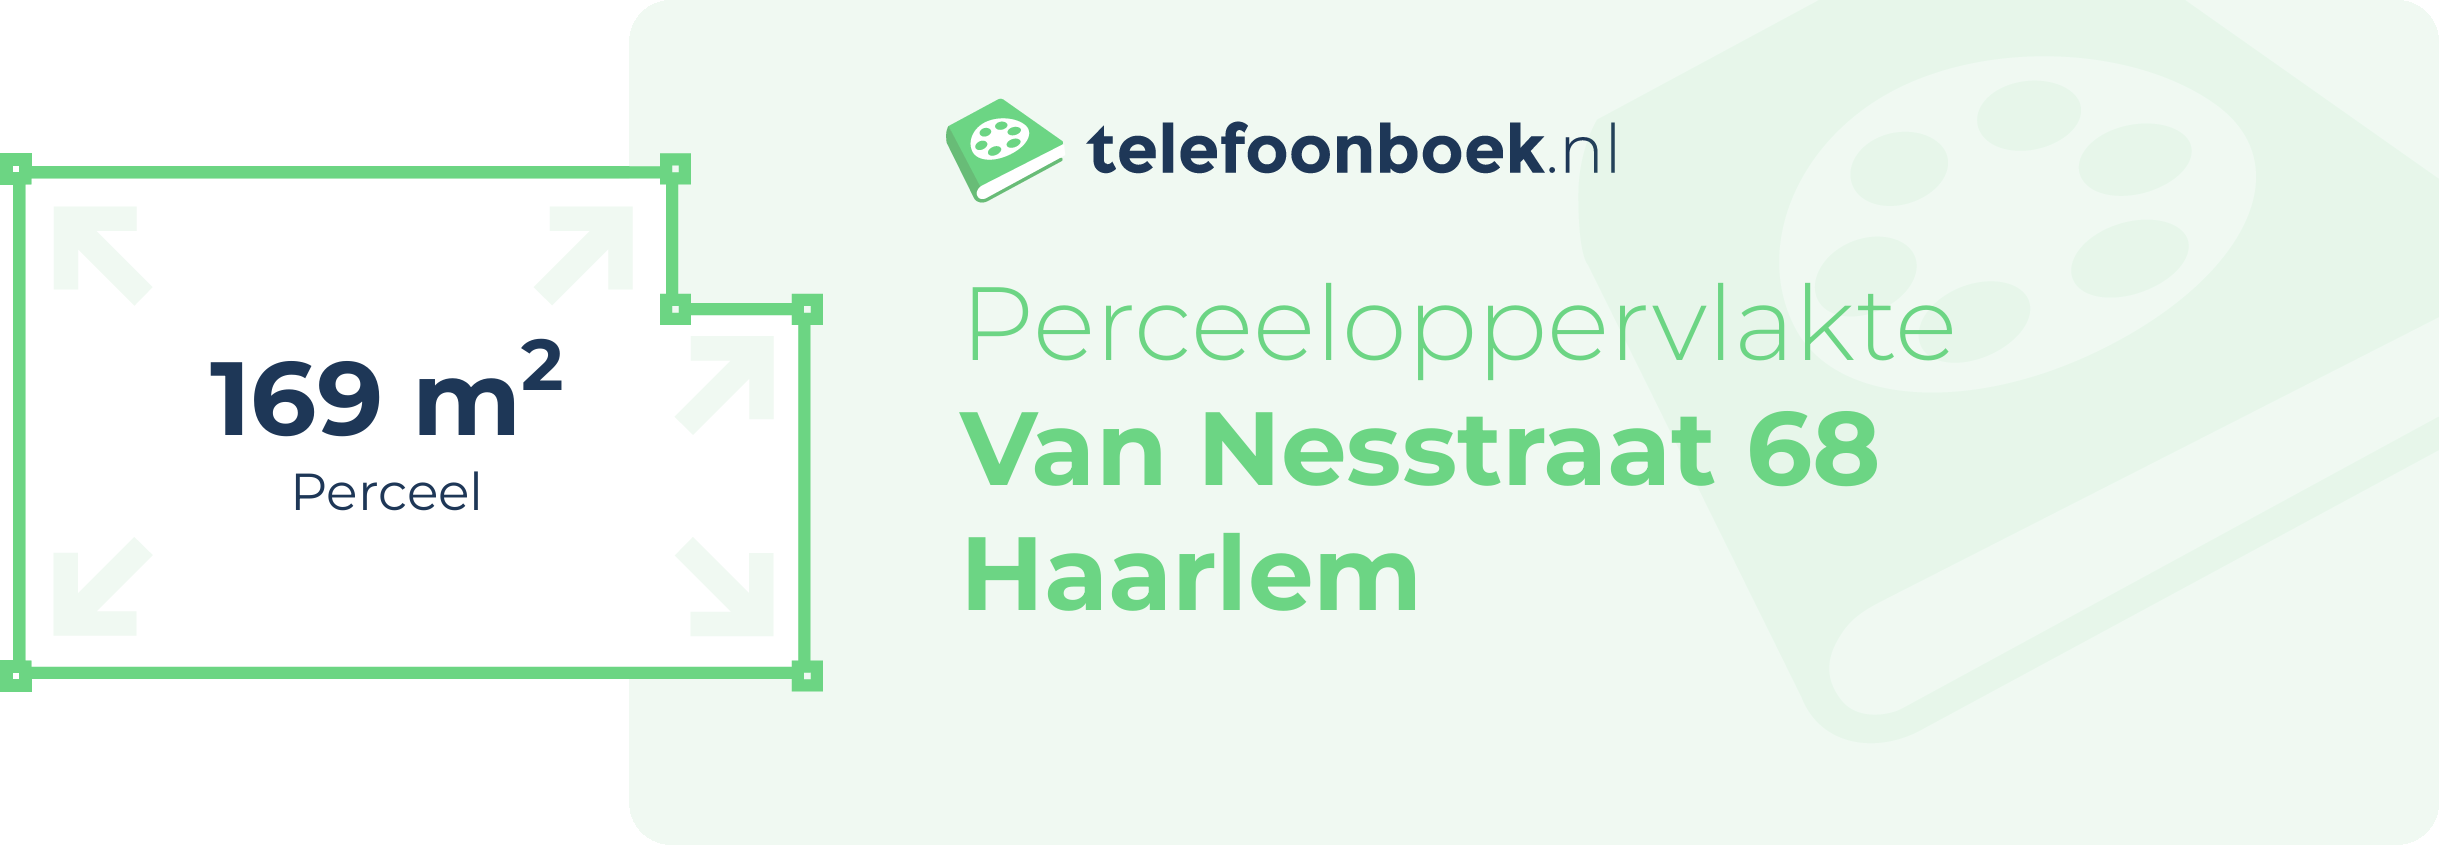 Perceeloppervlakte Van Nesstraat 68 Haarlem